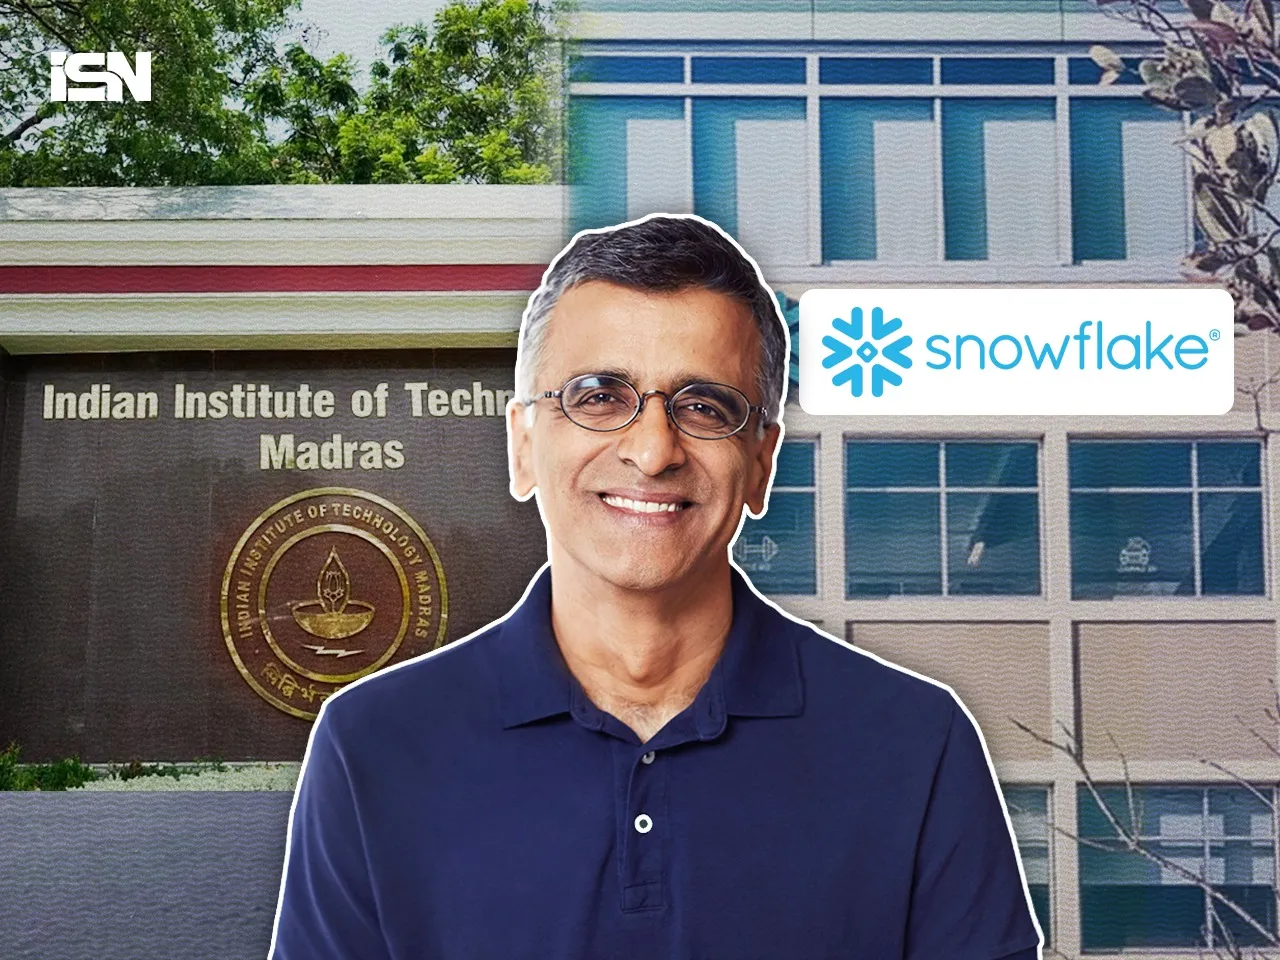 Sridhar Ramaswamy, CEO of Snowflake